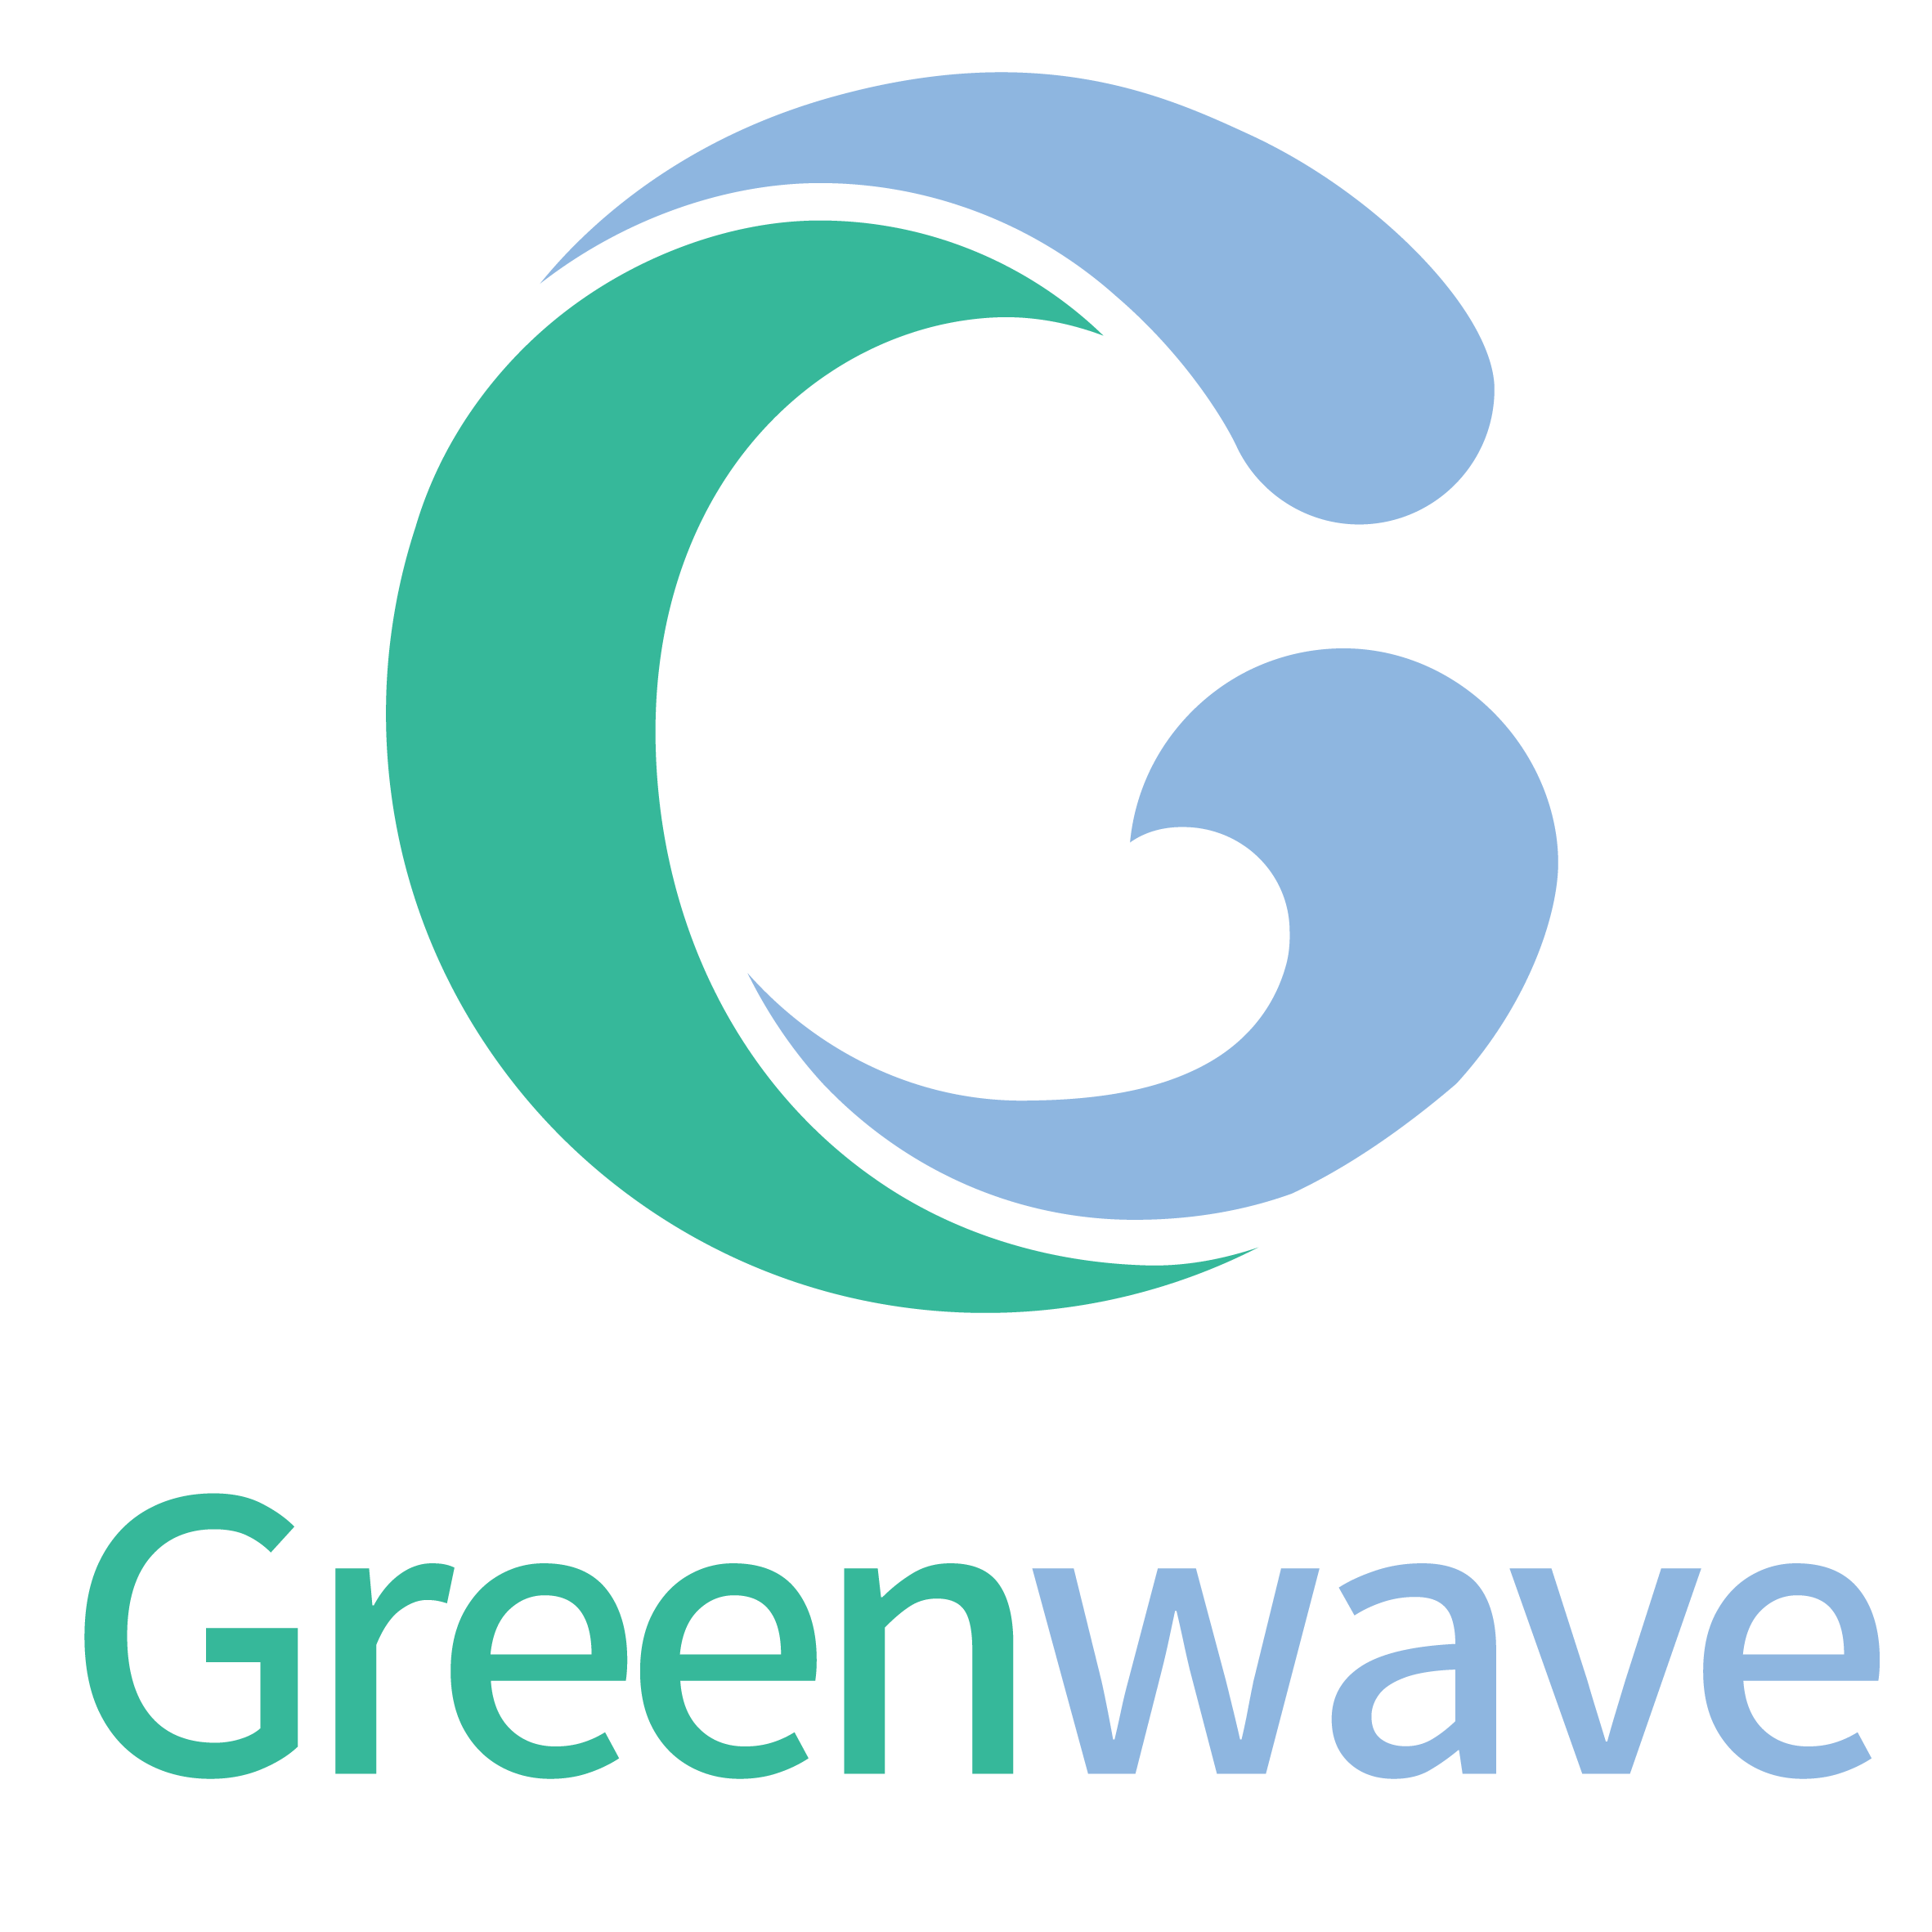 greenwave logo final